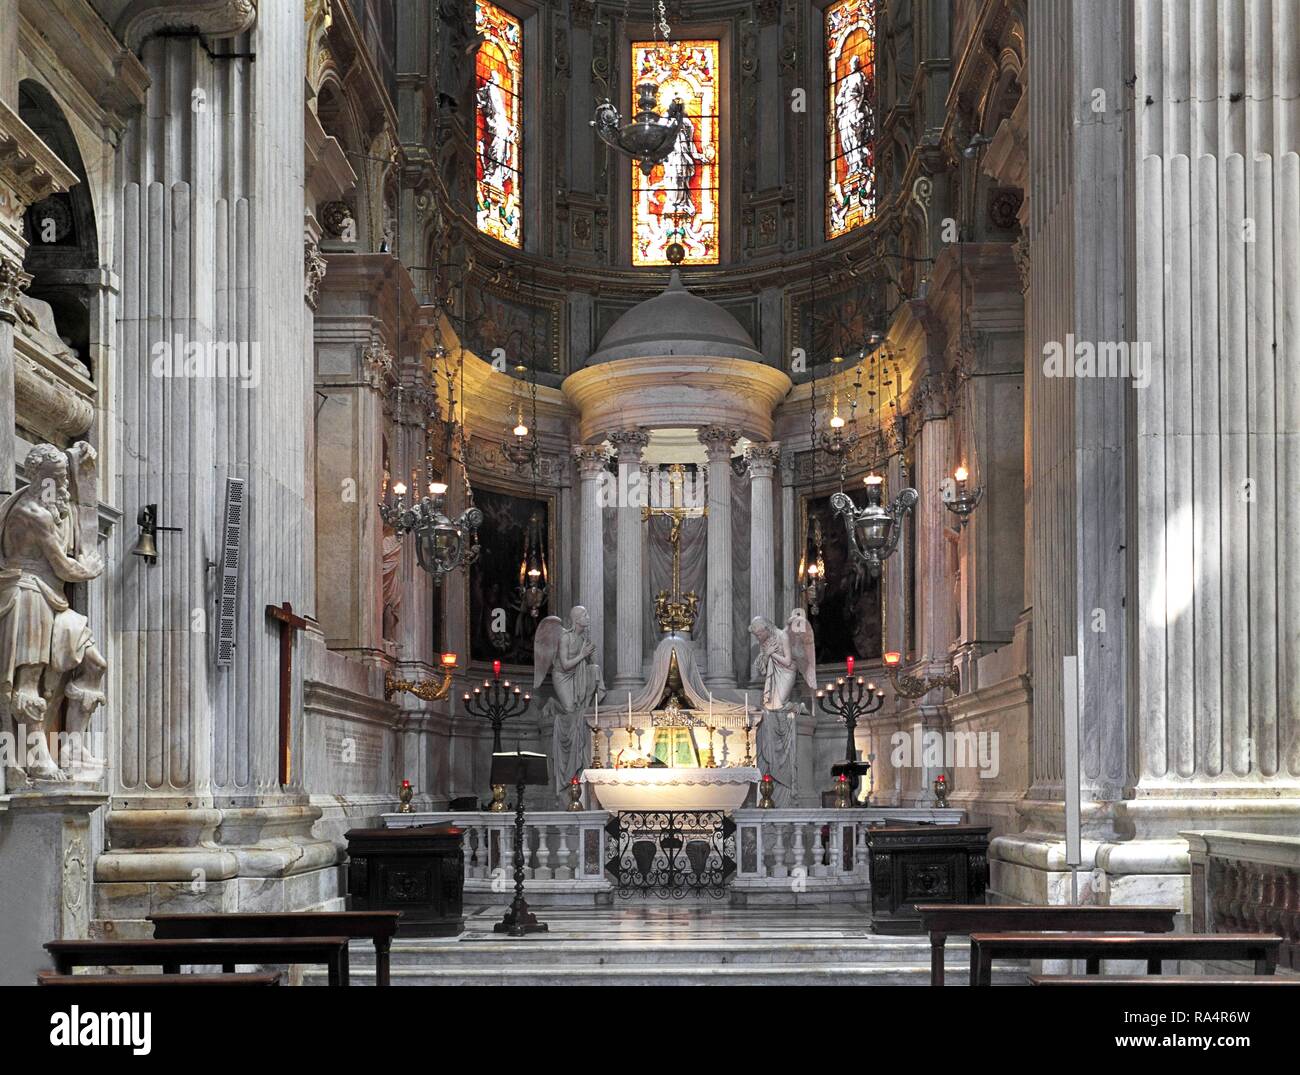 Wlochy - Ligurie - Gênes - Katedra San Lorenzo - Cattedrale di San Lorewnzo przy Via Tommaso Reggio Italie - Ligurie - Gênes - Gênes - Cathédrale Cathédrale de Saint Lawrence Banque D'Images